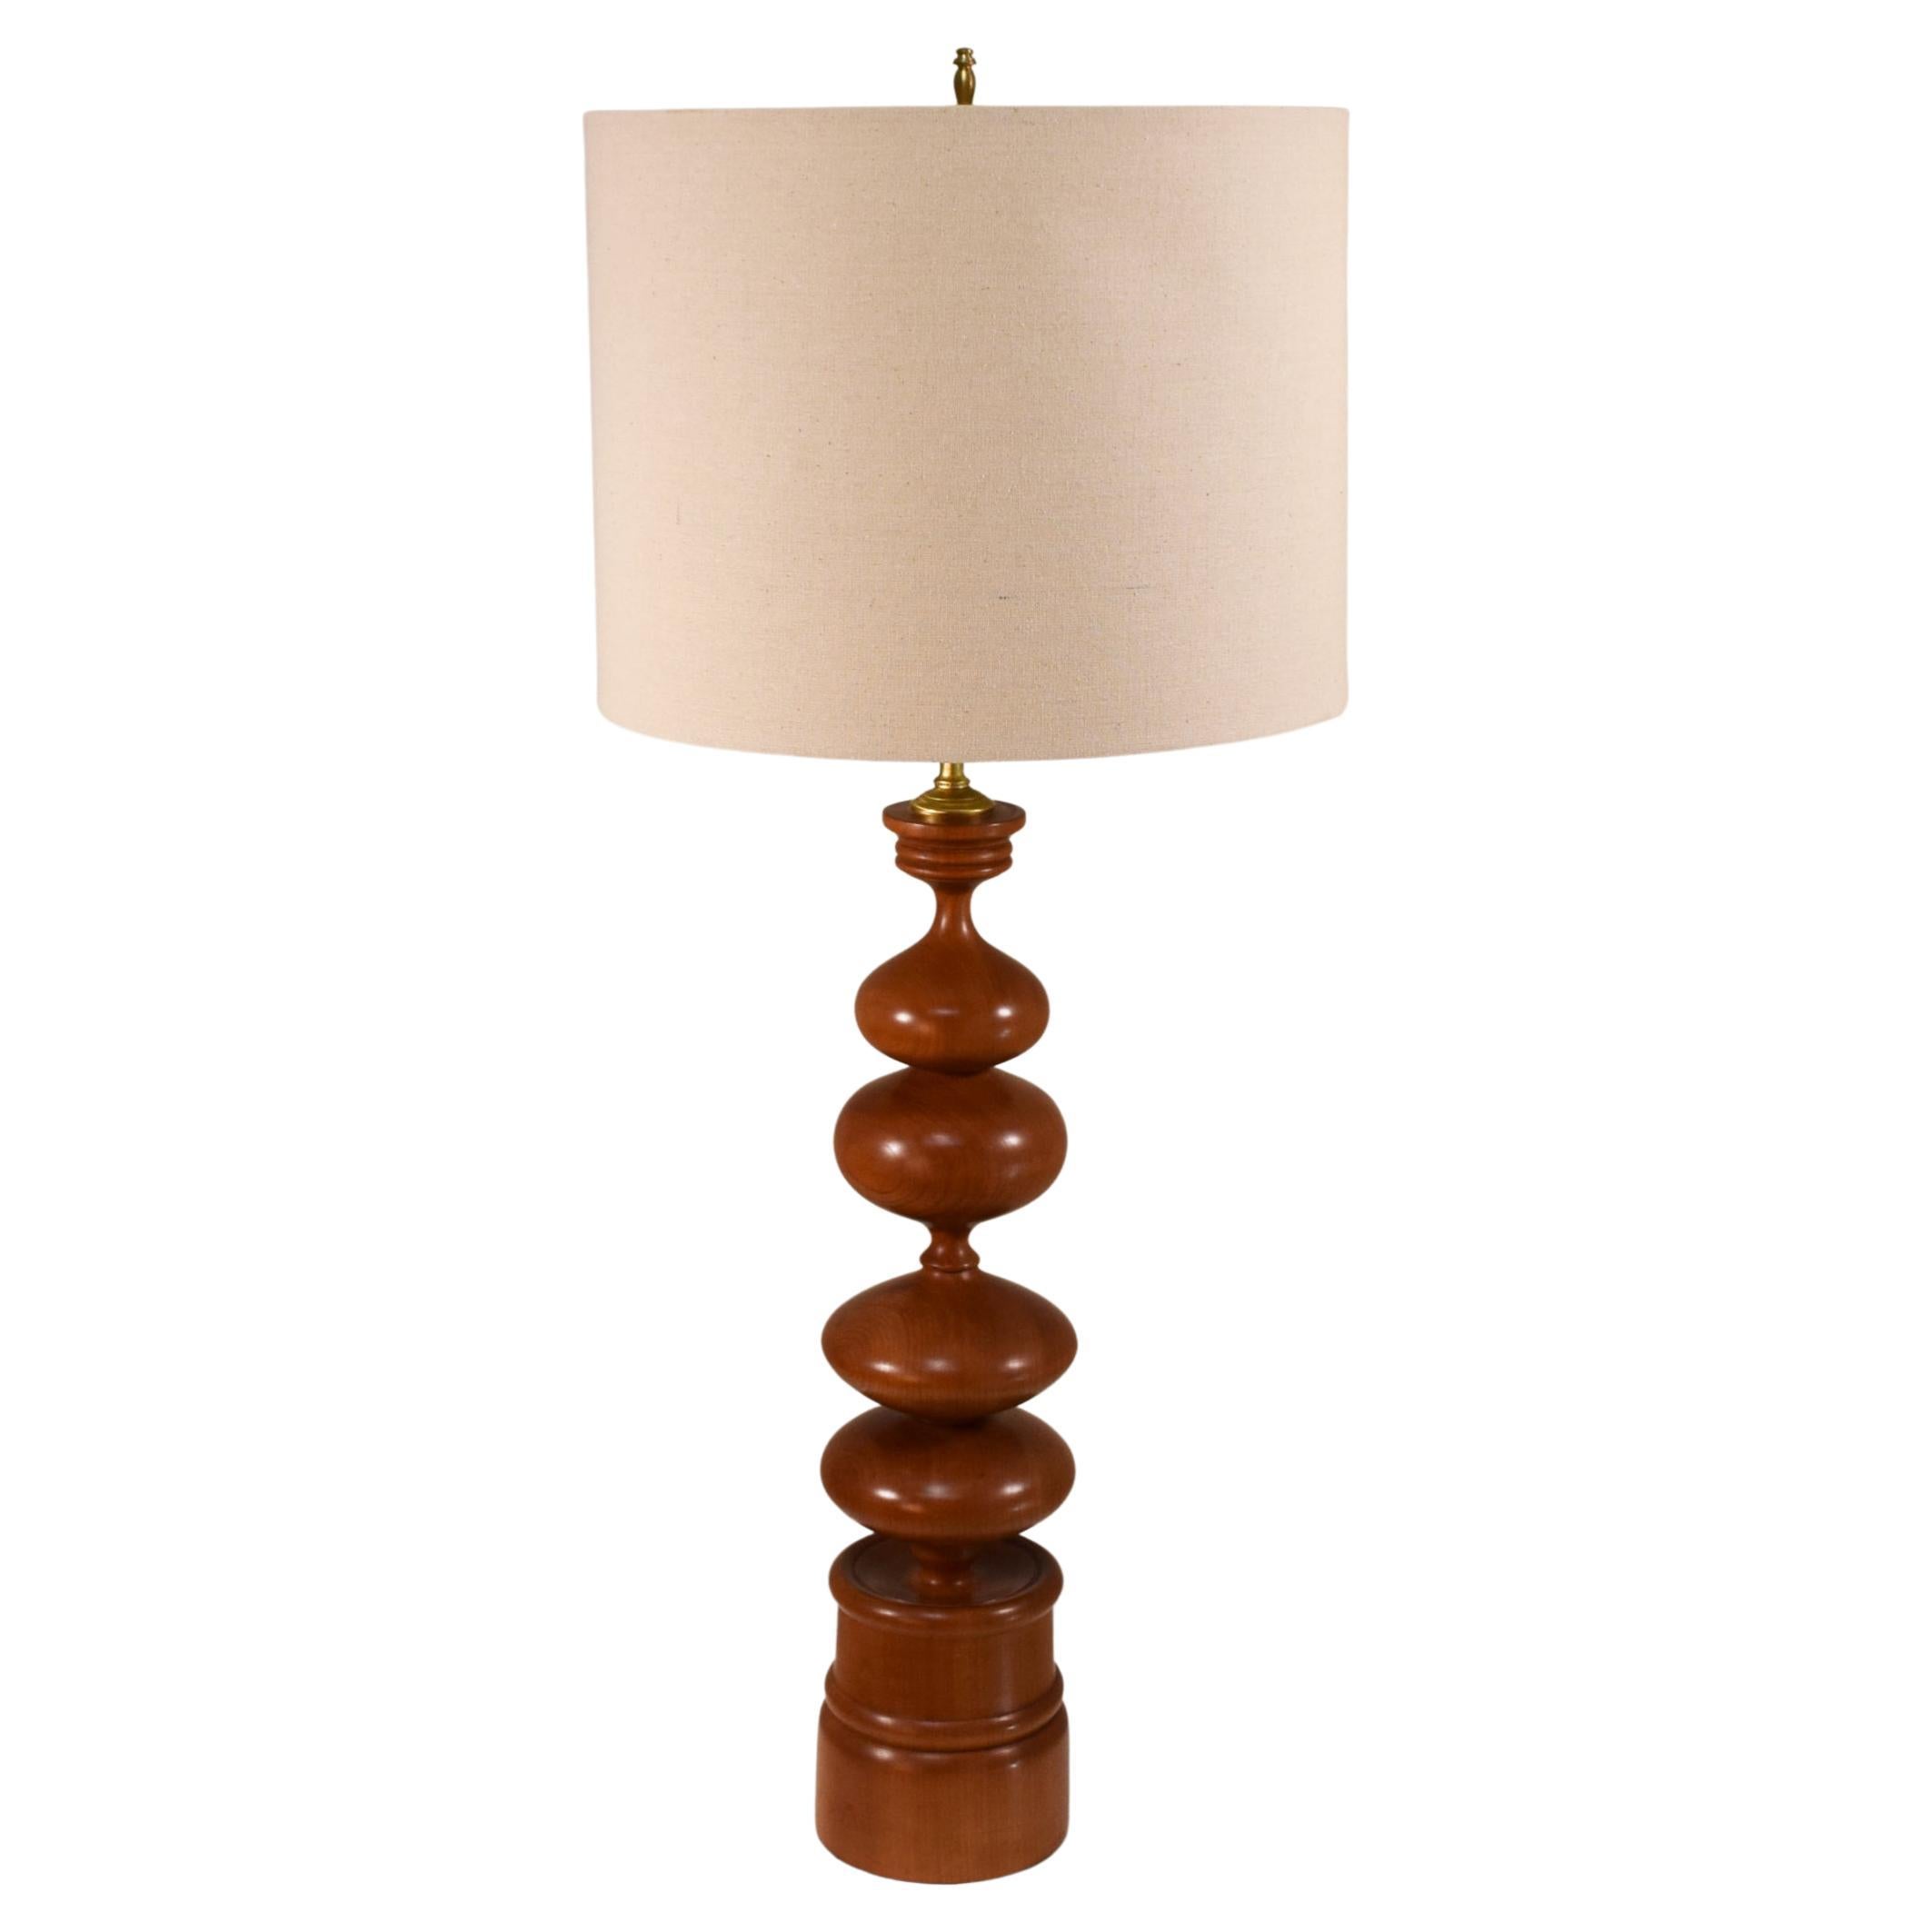 Rude Osolnik Table Lamp For Sale